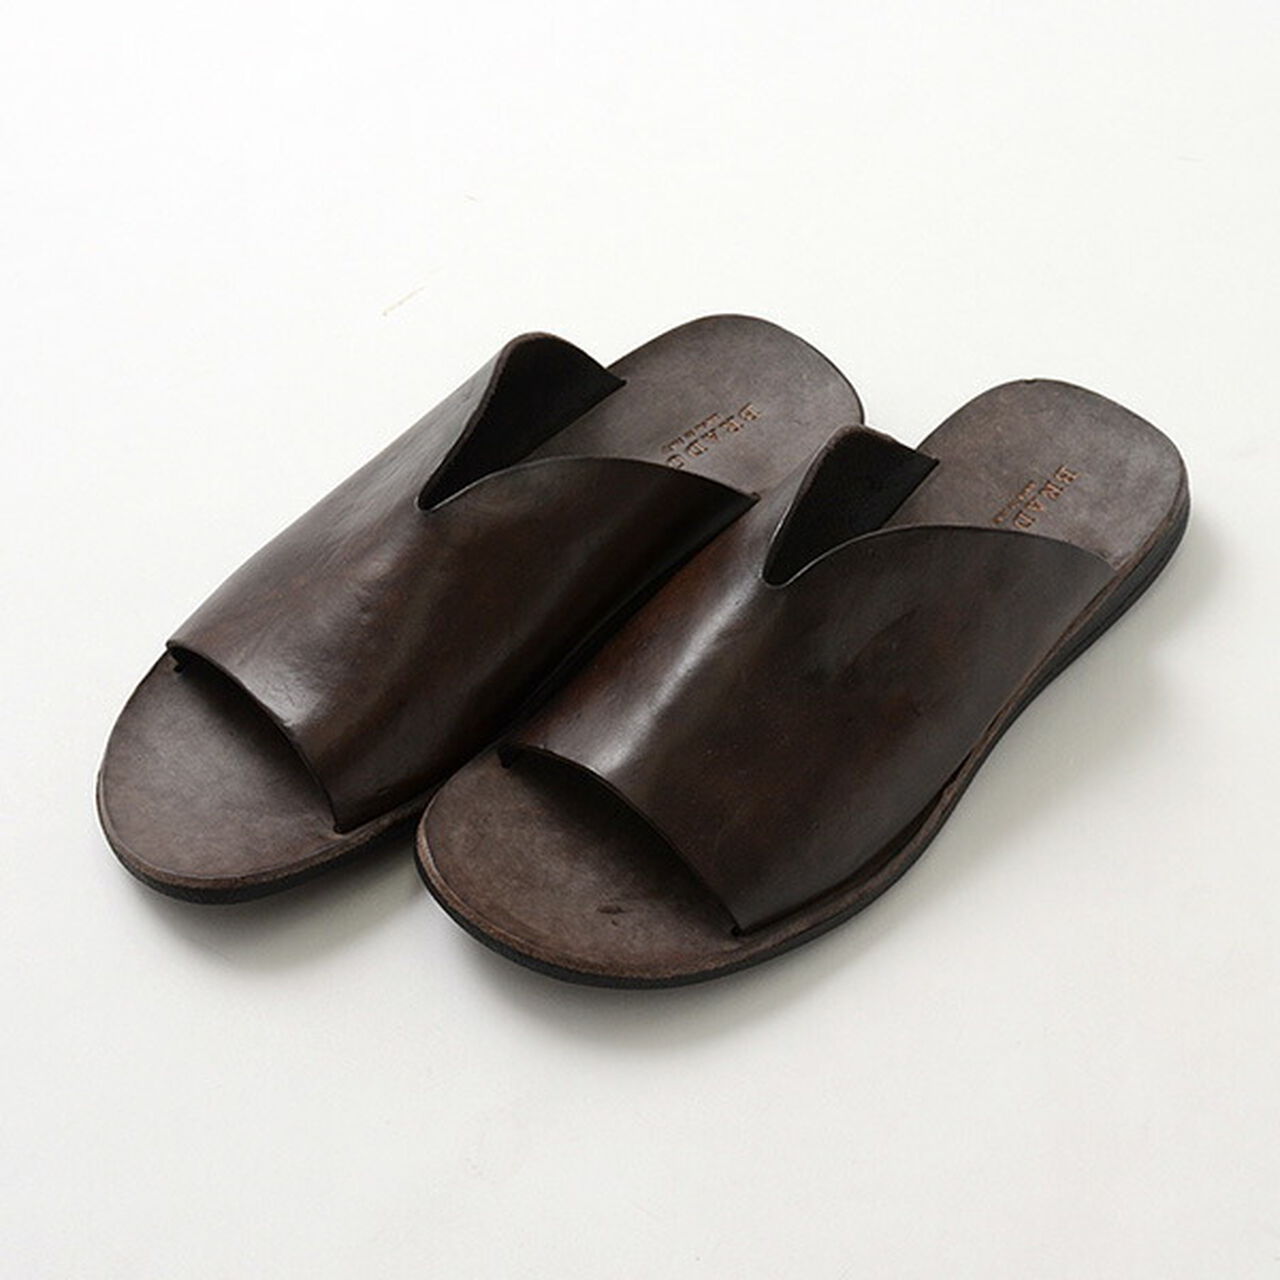 BRADOR Men's leather sandals